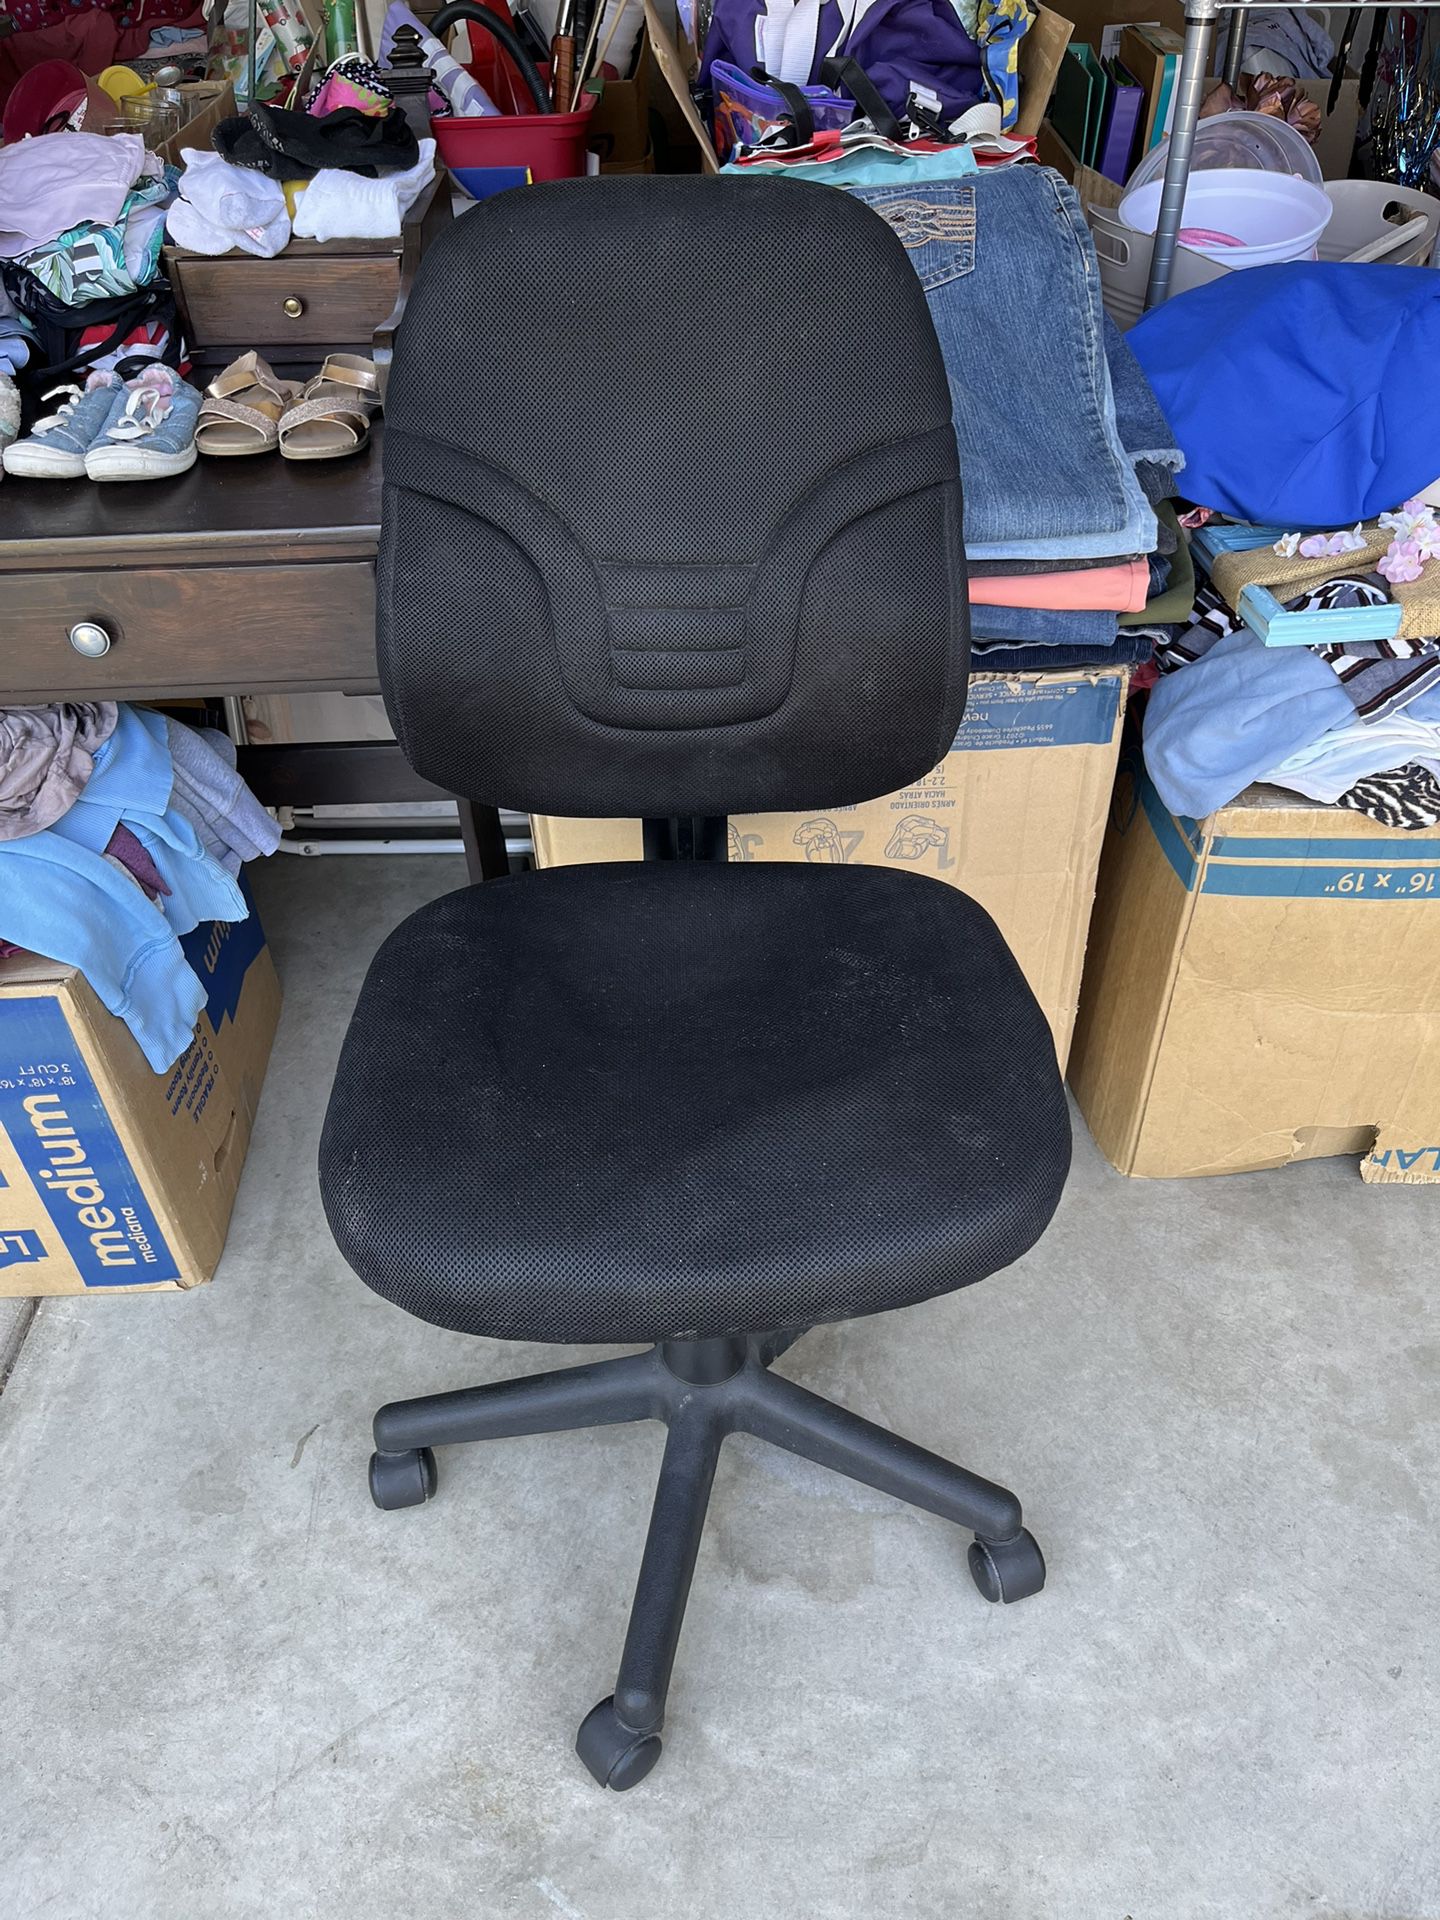 Desk Chair On Wheels $10